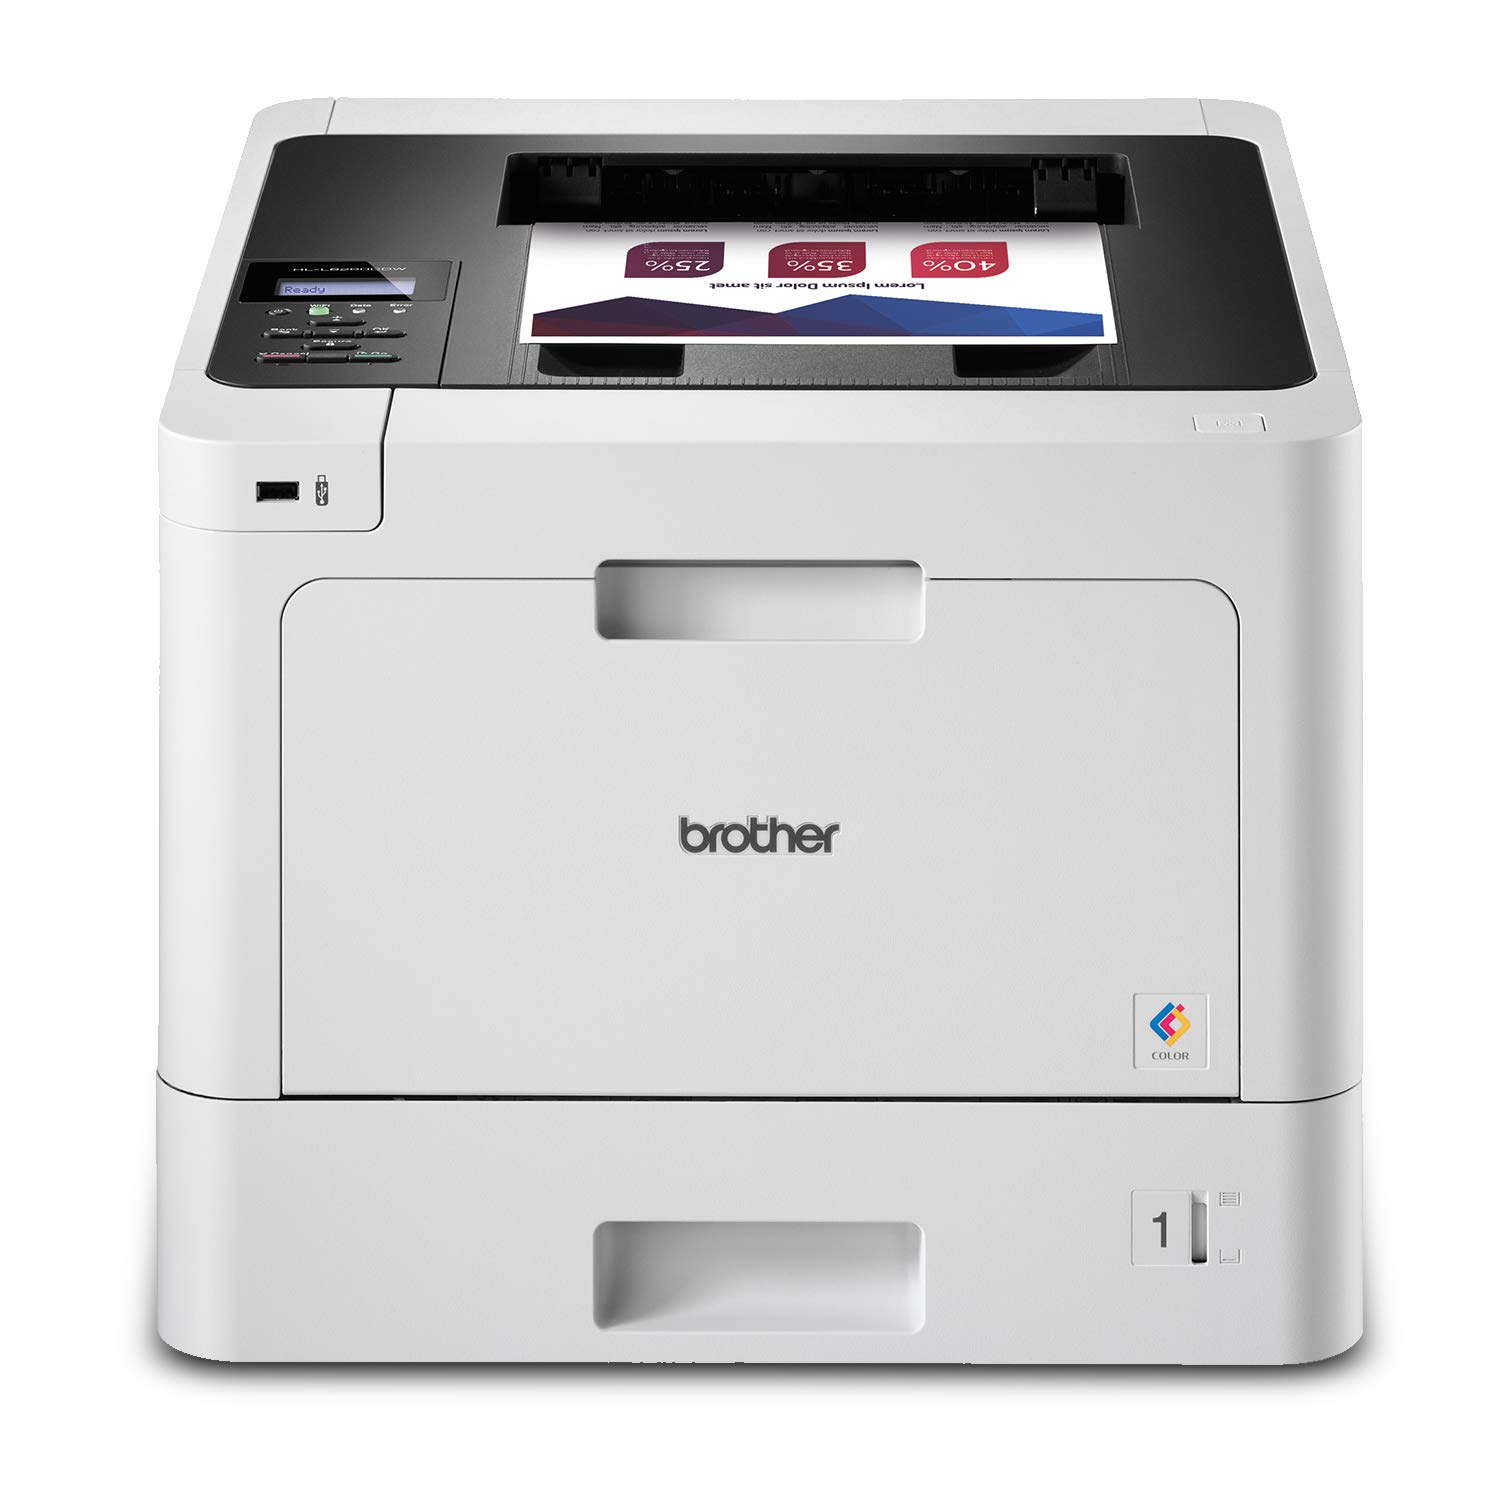 Brother Printer HLL8260CDW Business Color Laser Printer...